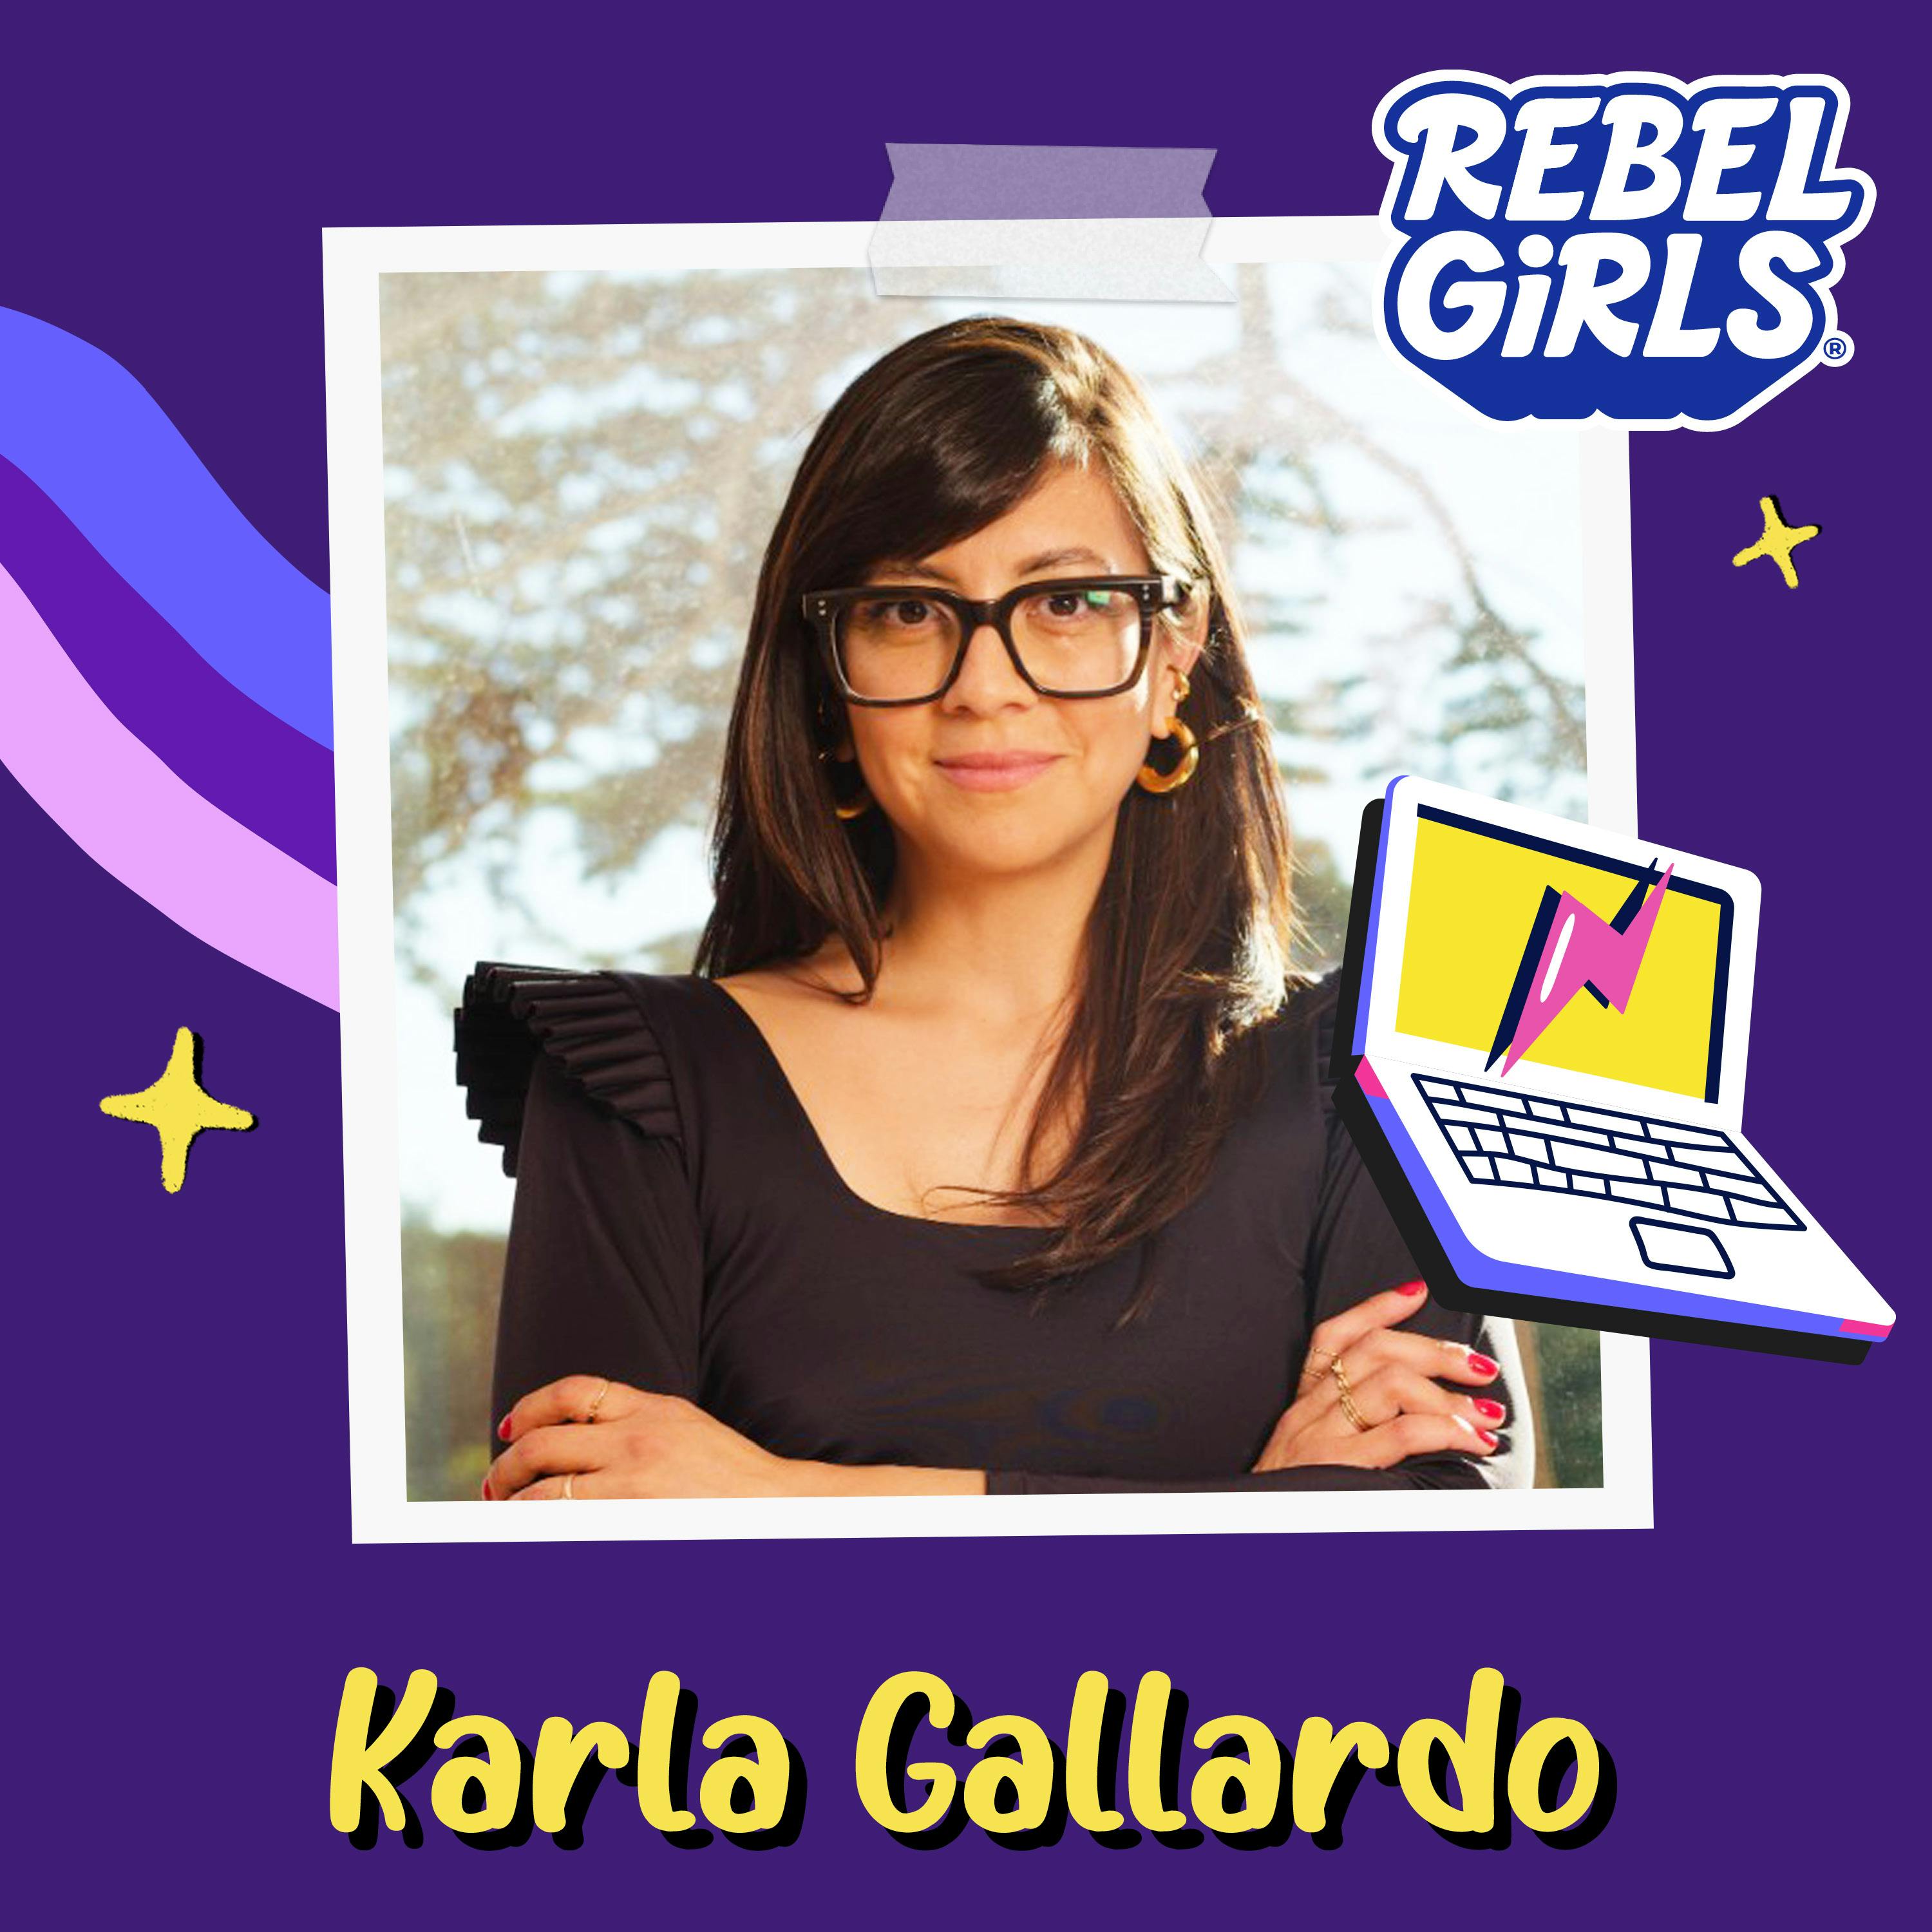 Get to Know Karla Gallardo